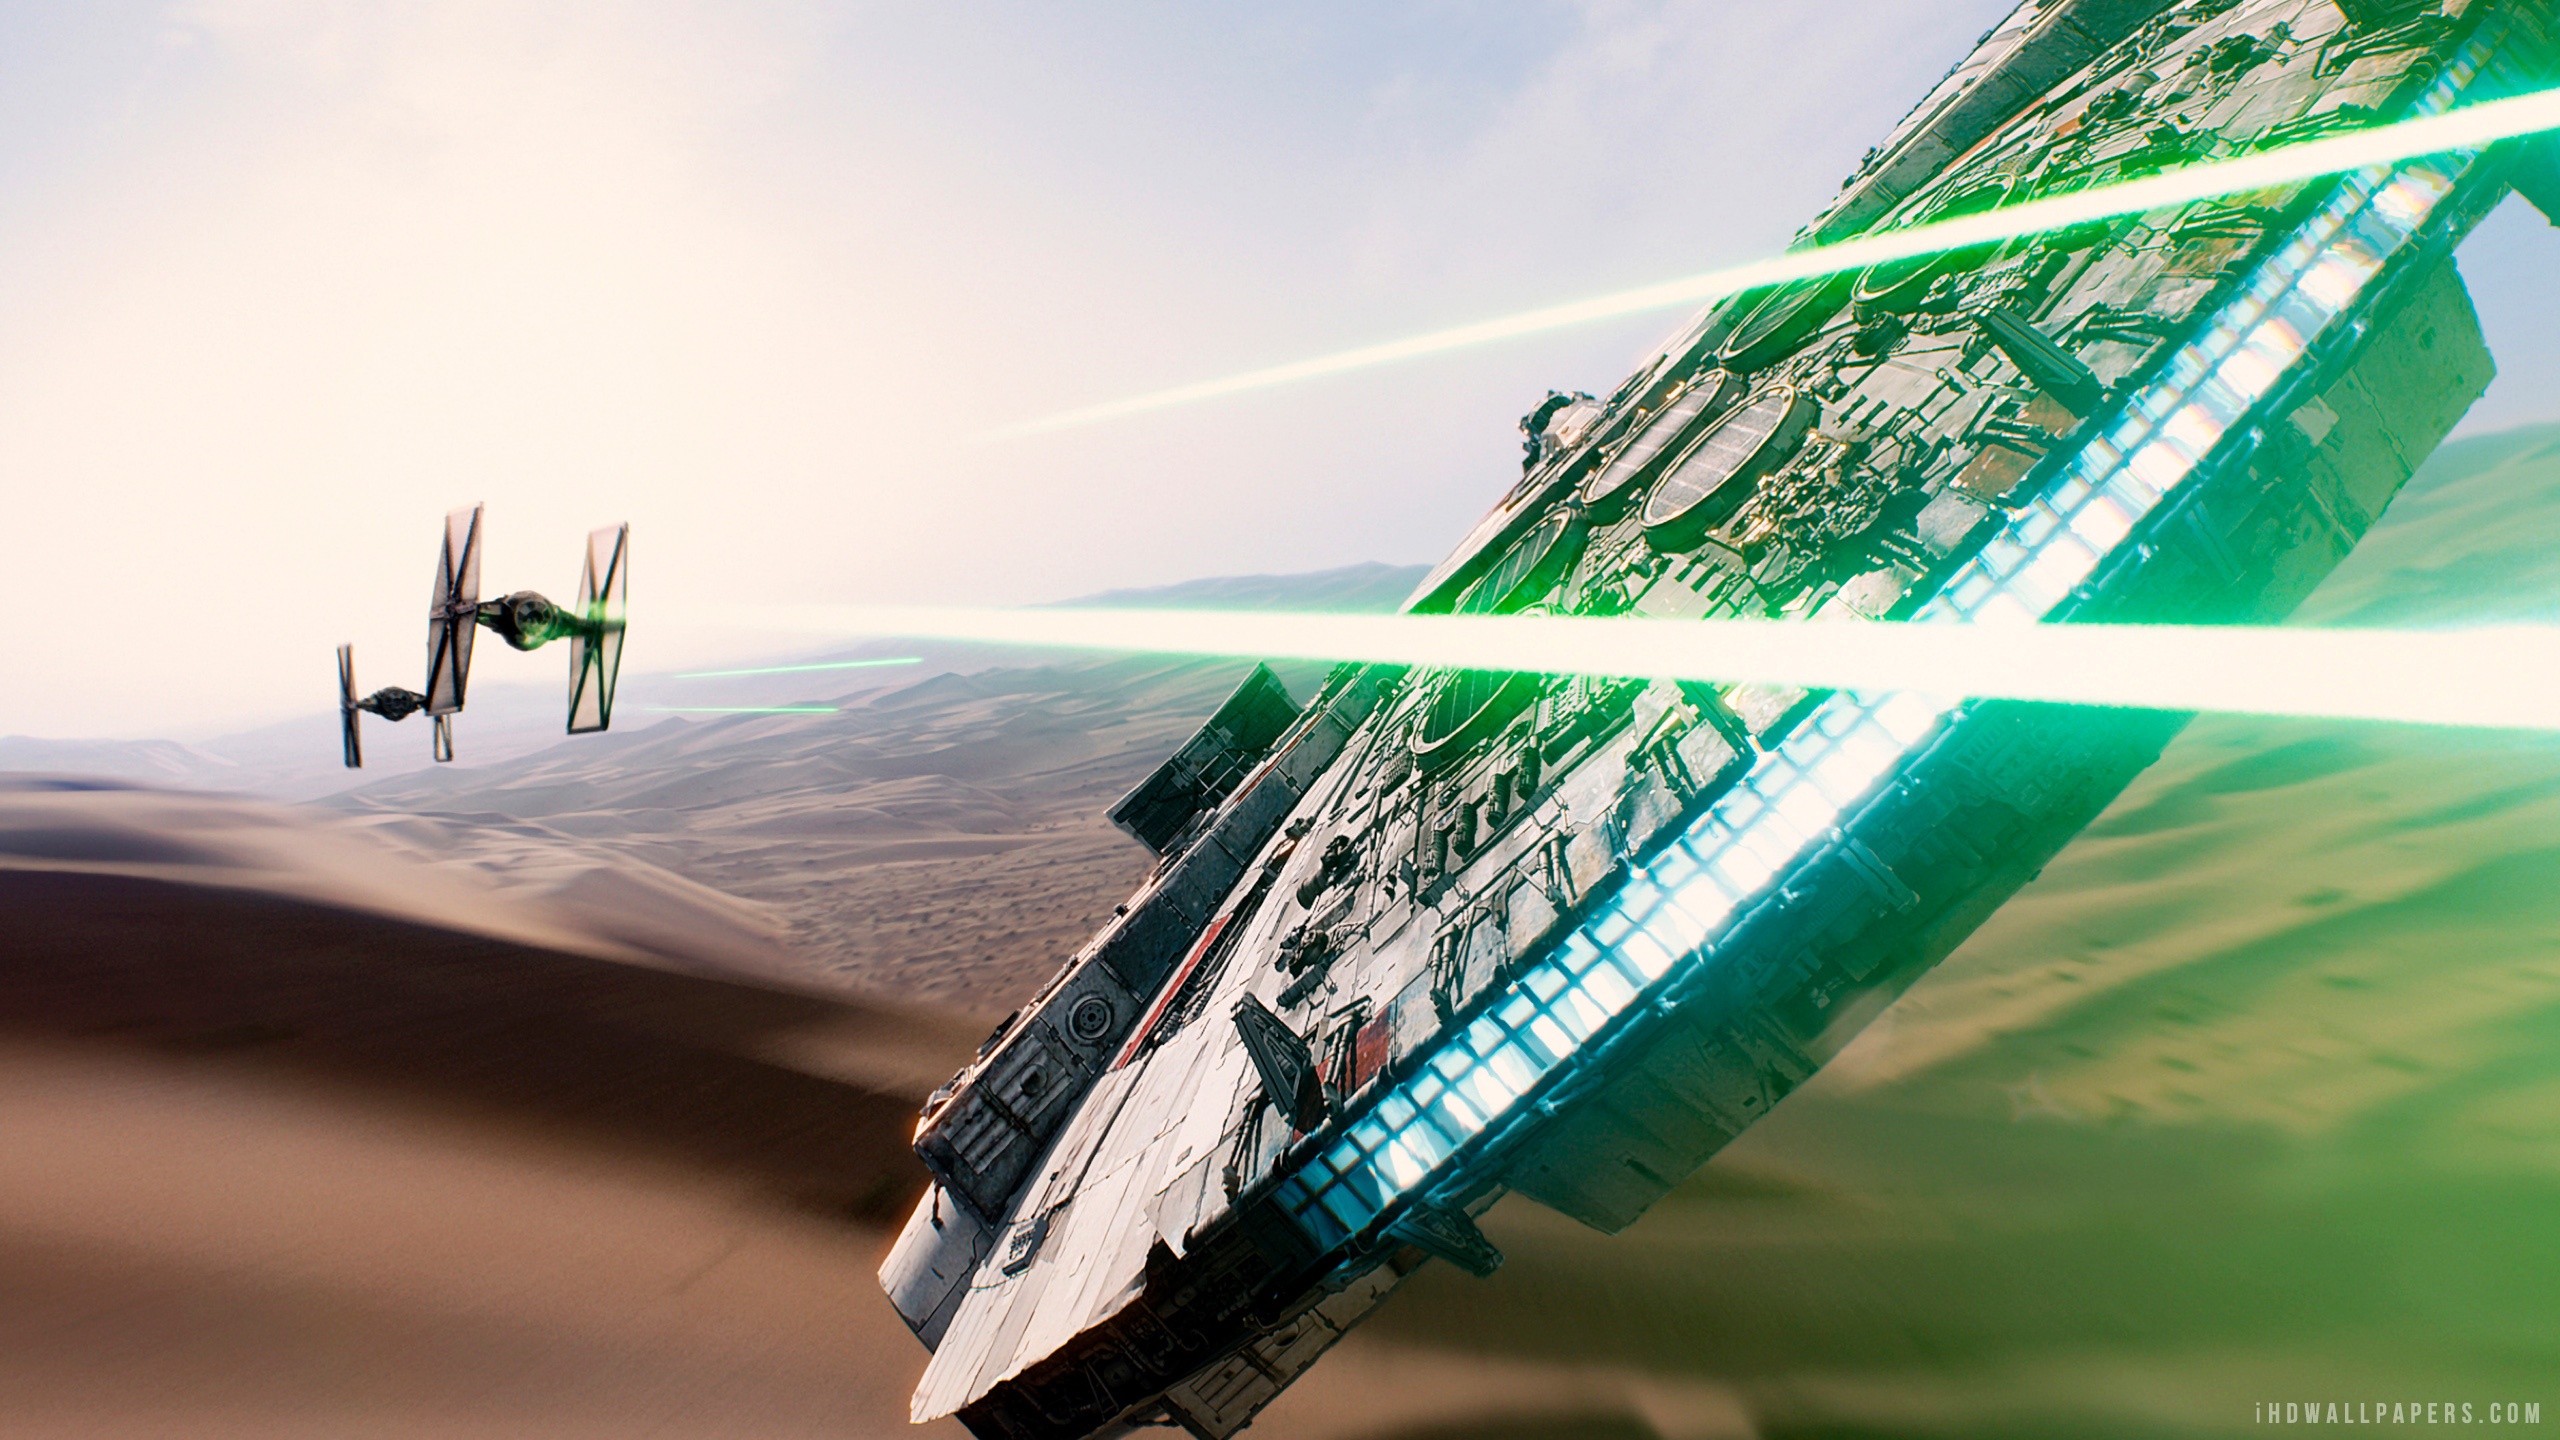 Star Wars Episode VII The Force Awakens 2015 HD Wallpaper   iHD